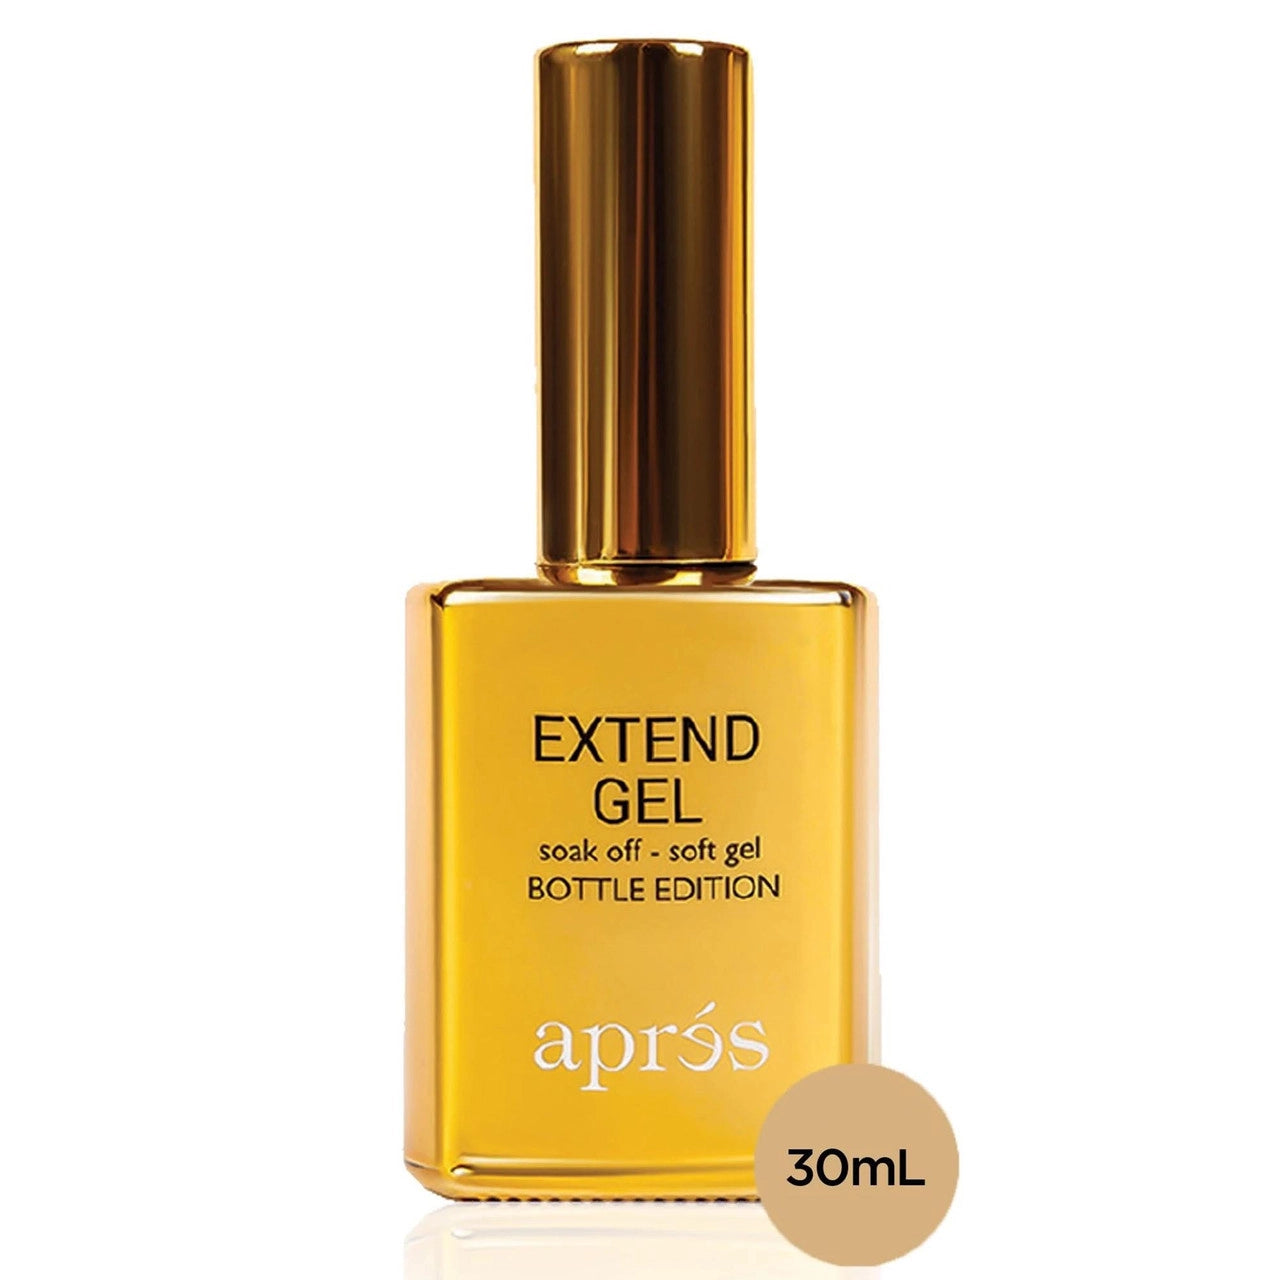 Extend Gel Bottle (Gold) in Bottles Edition - #APEX-B30 - Premier Nail Supply 